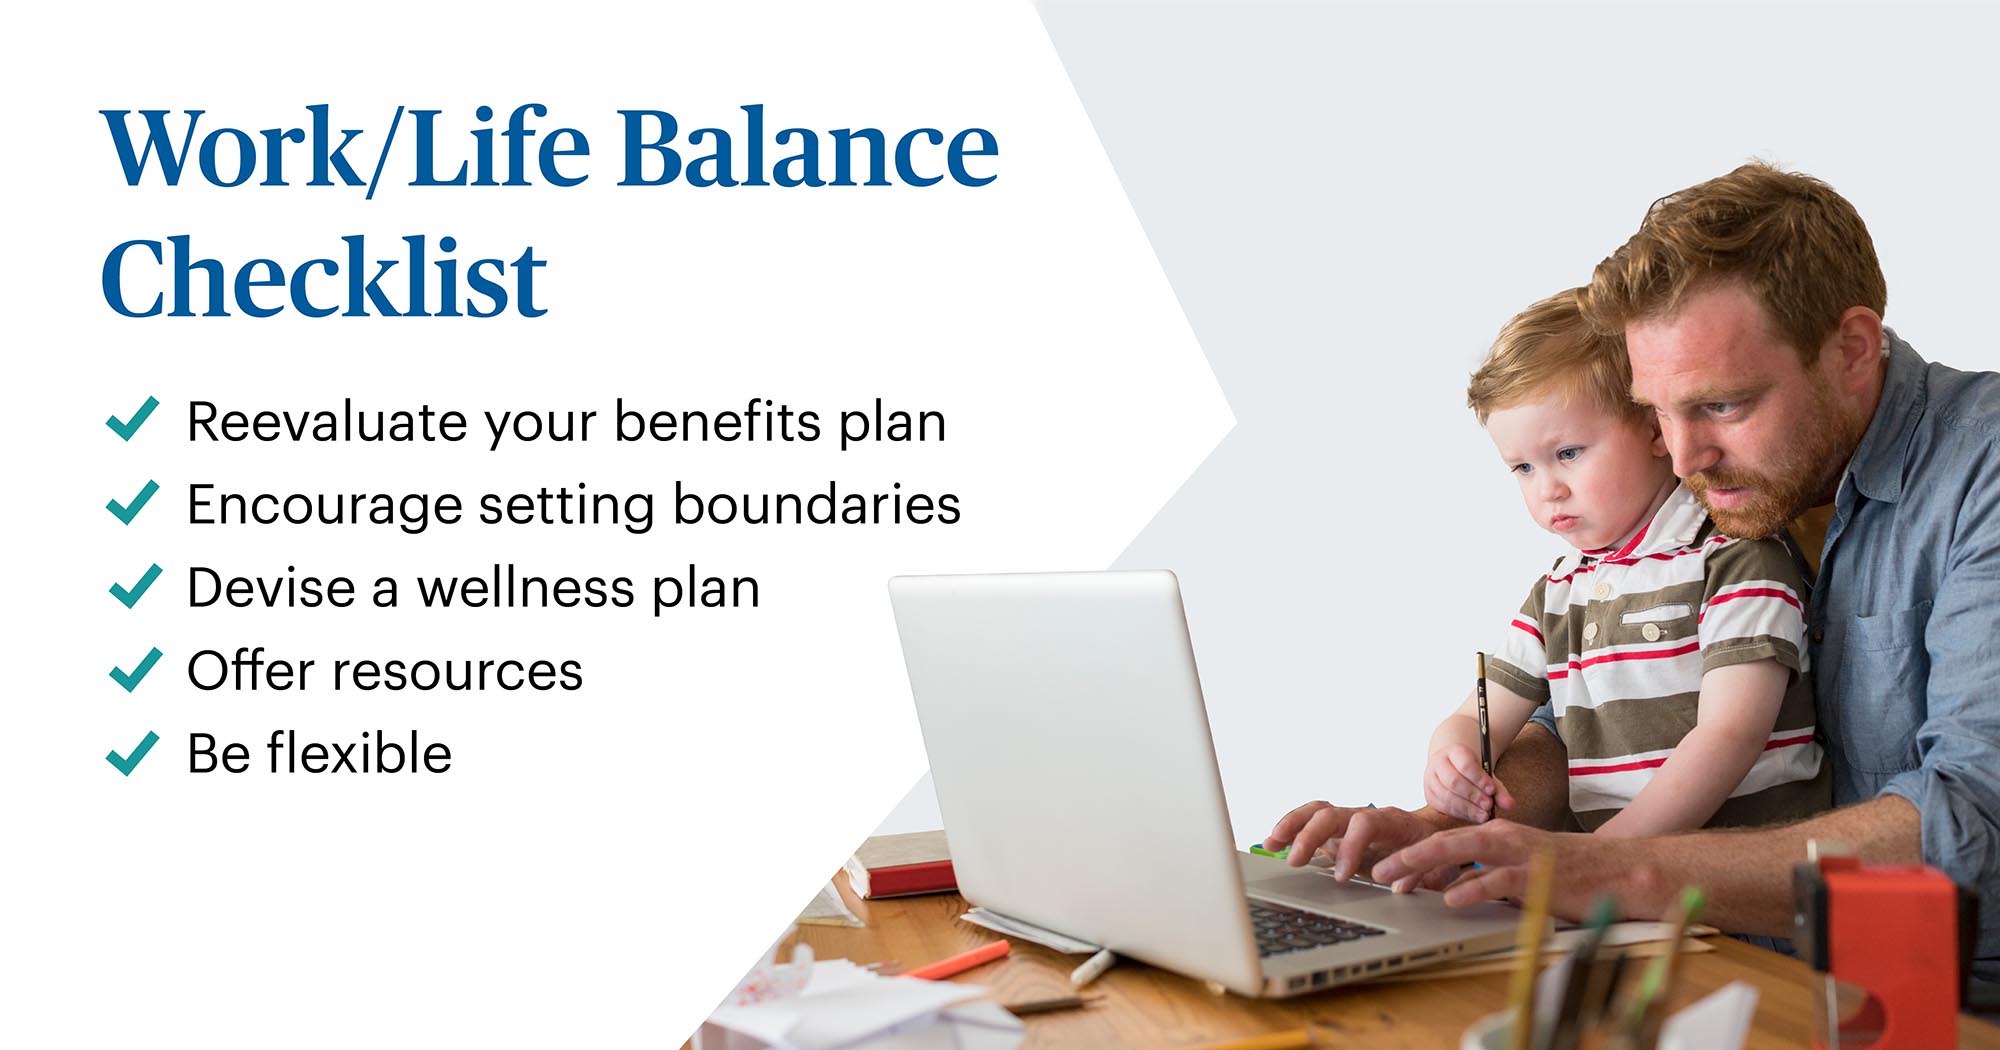 a work/life balance checklist